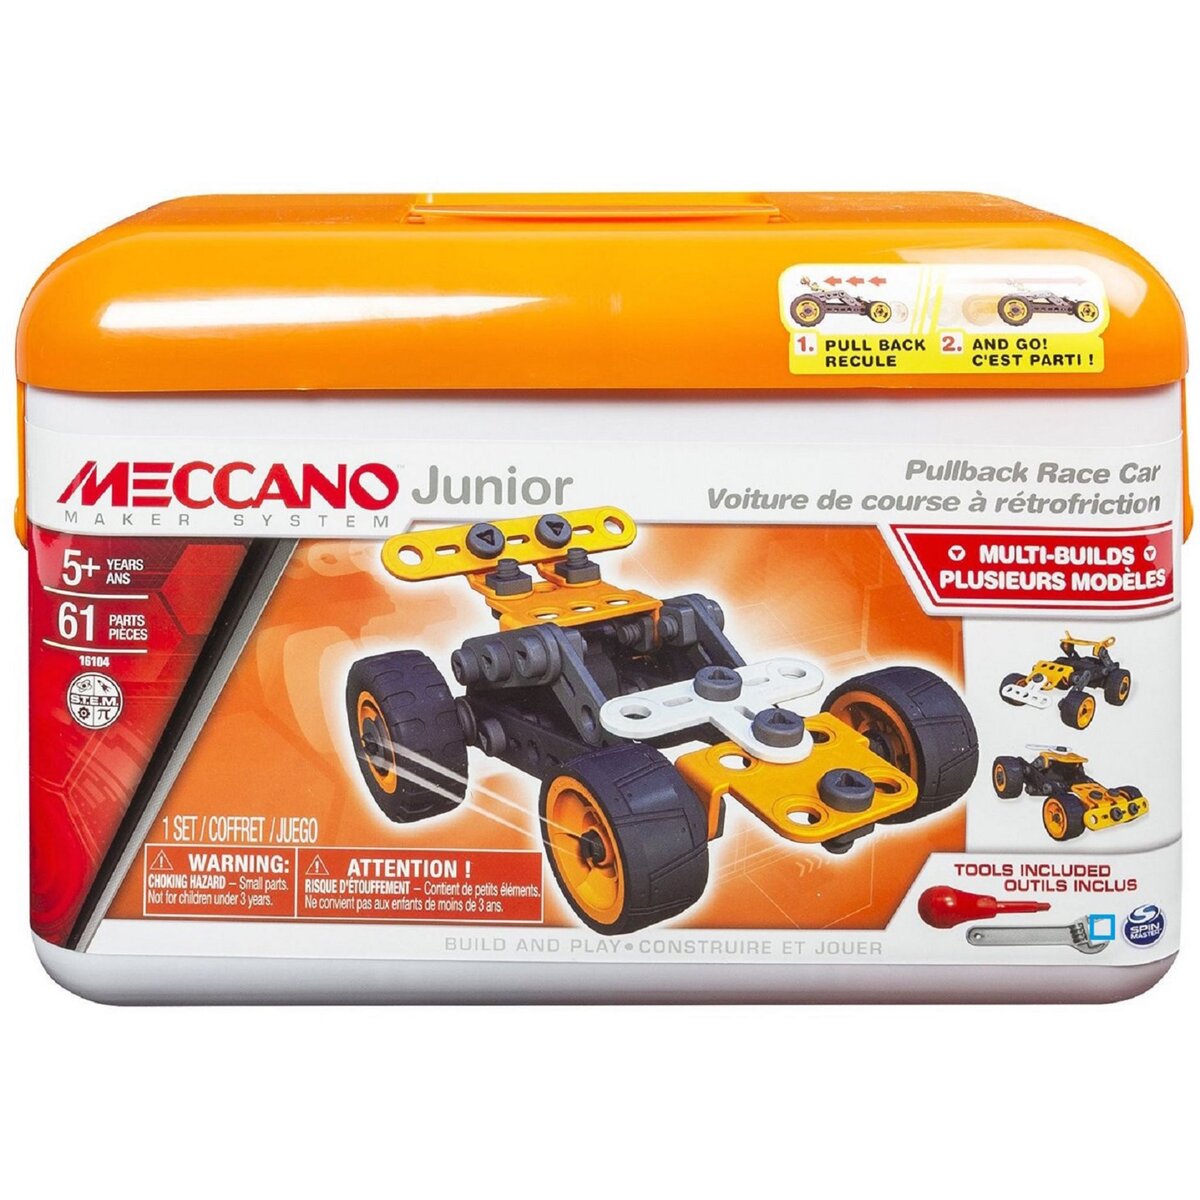 MECCANO Meccano junior mallette voiture rétro friction 